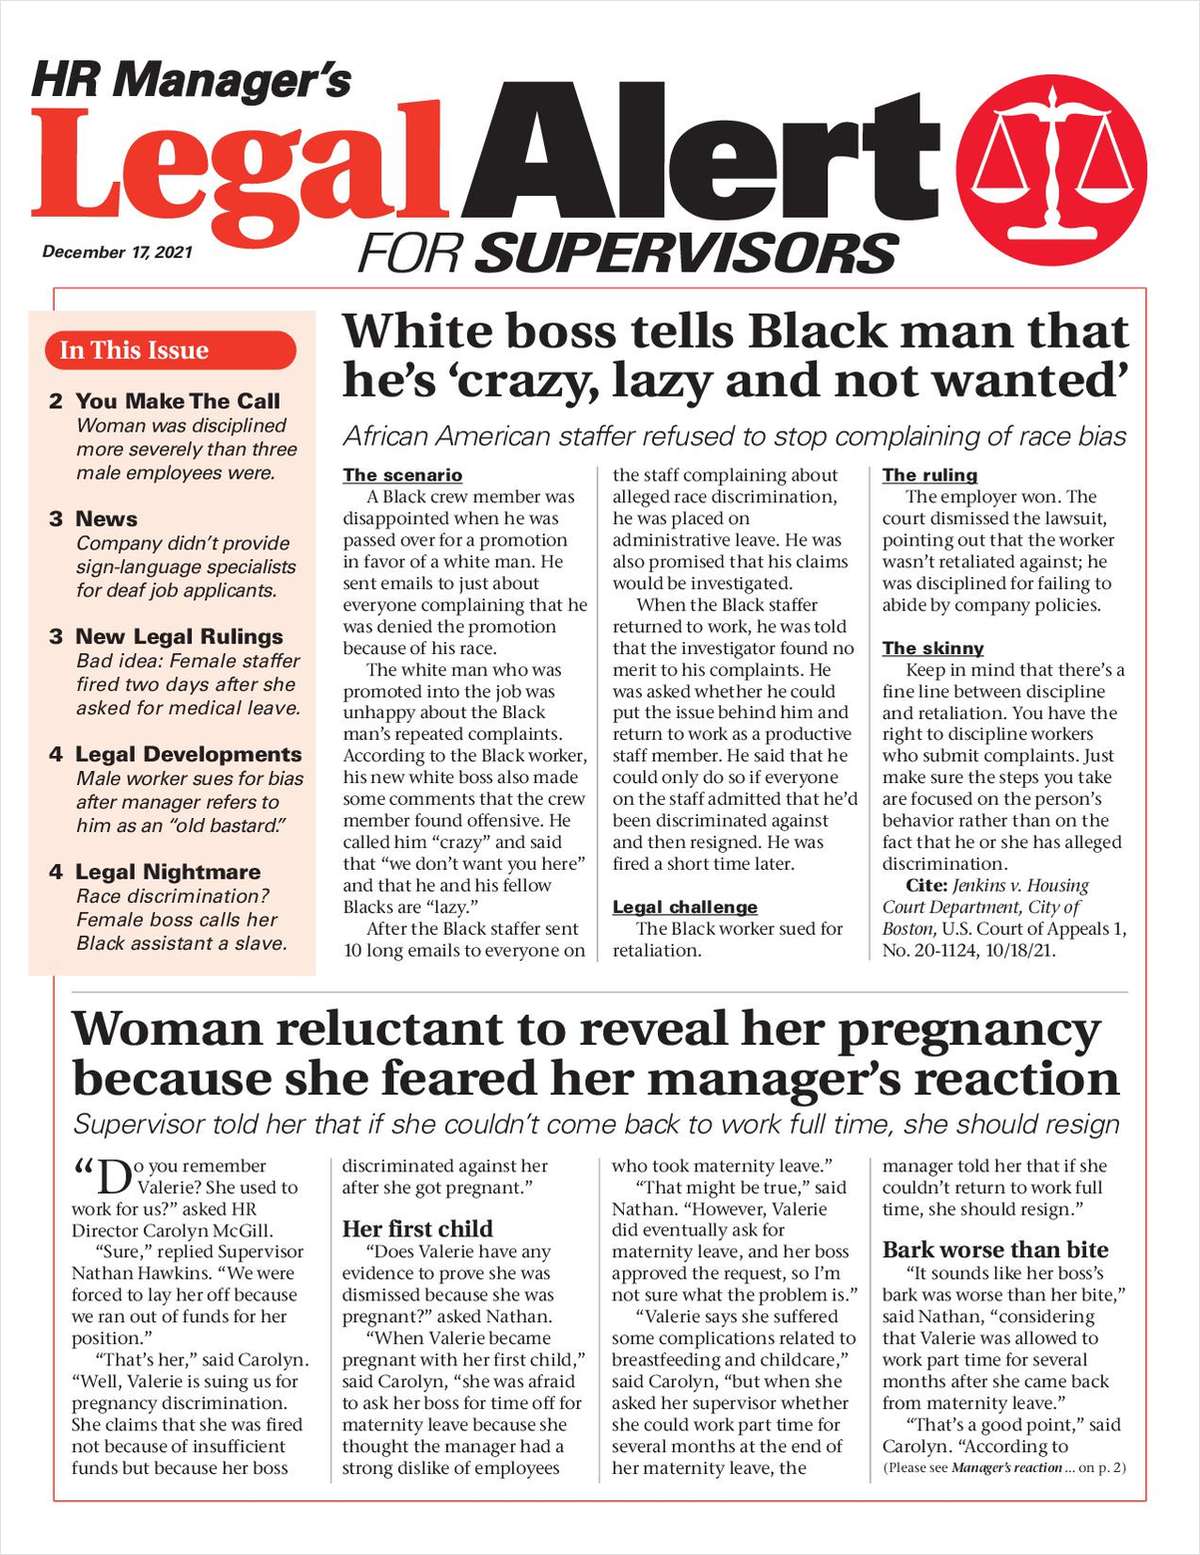 HR Manager's Legal Alert for Supervisors Newsletter: December 13 Edition